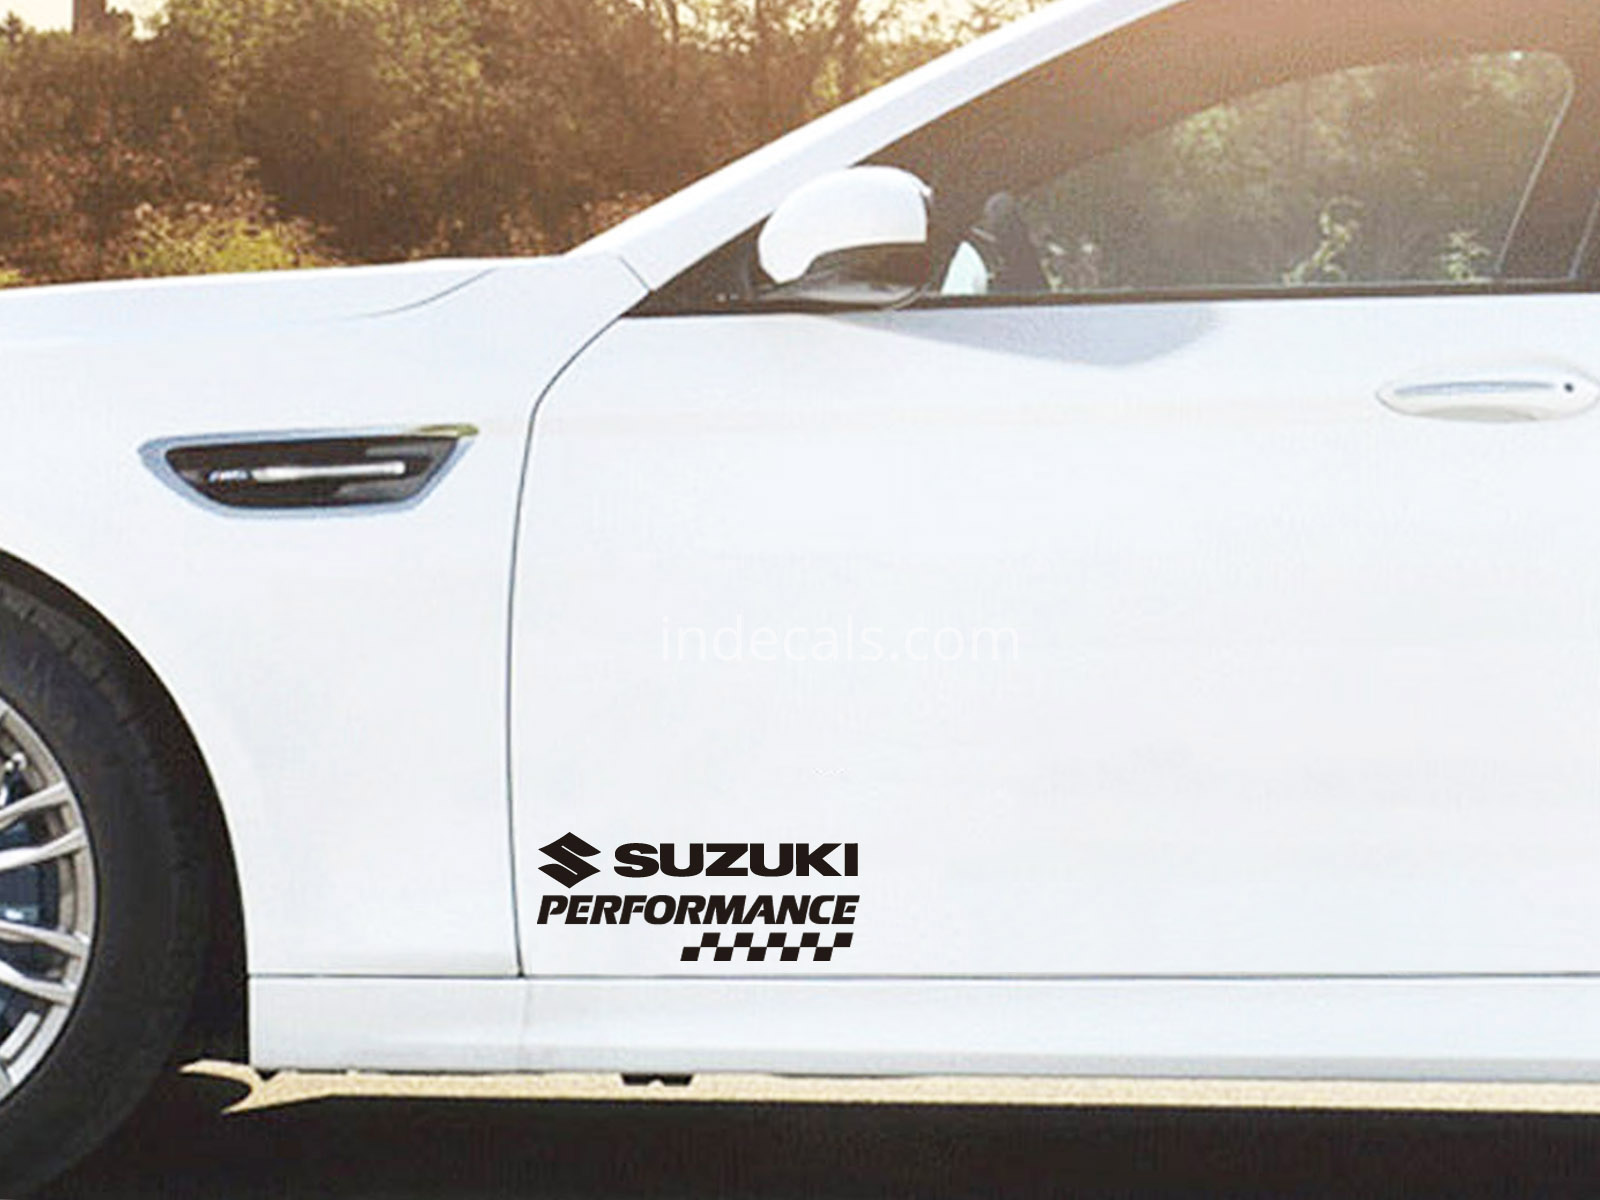 2 x Suzuki Performance Stickers for Doors - Black